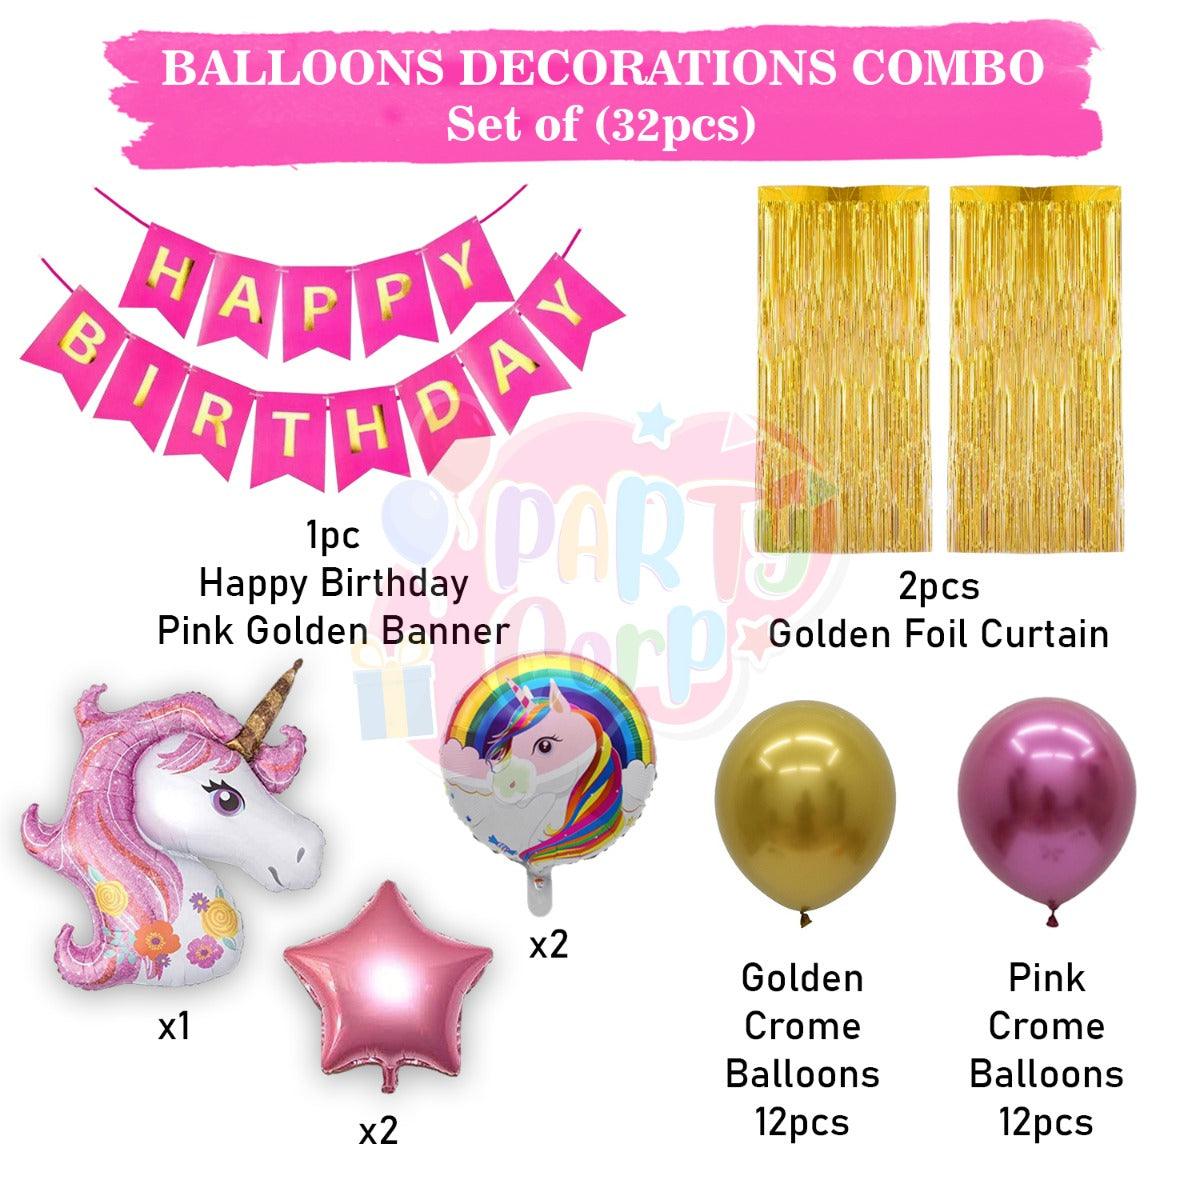 PartyCorp Happy Birthday Decoration Kit Combo Unicorn Theme 32 Pcs - Gold, Pink & Gold Chrome Balloons(24 pcs), 1 pc Pink & Gold Happy Birthday Printed Banner, 2 pc Gold Big Foil Curtain, 1 pc Unicorn Theme Pink Foil Balloon Bouquet